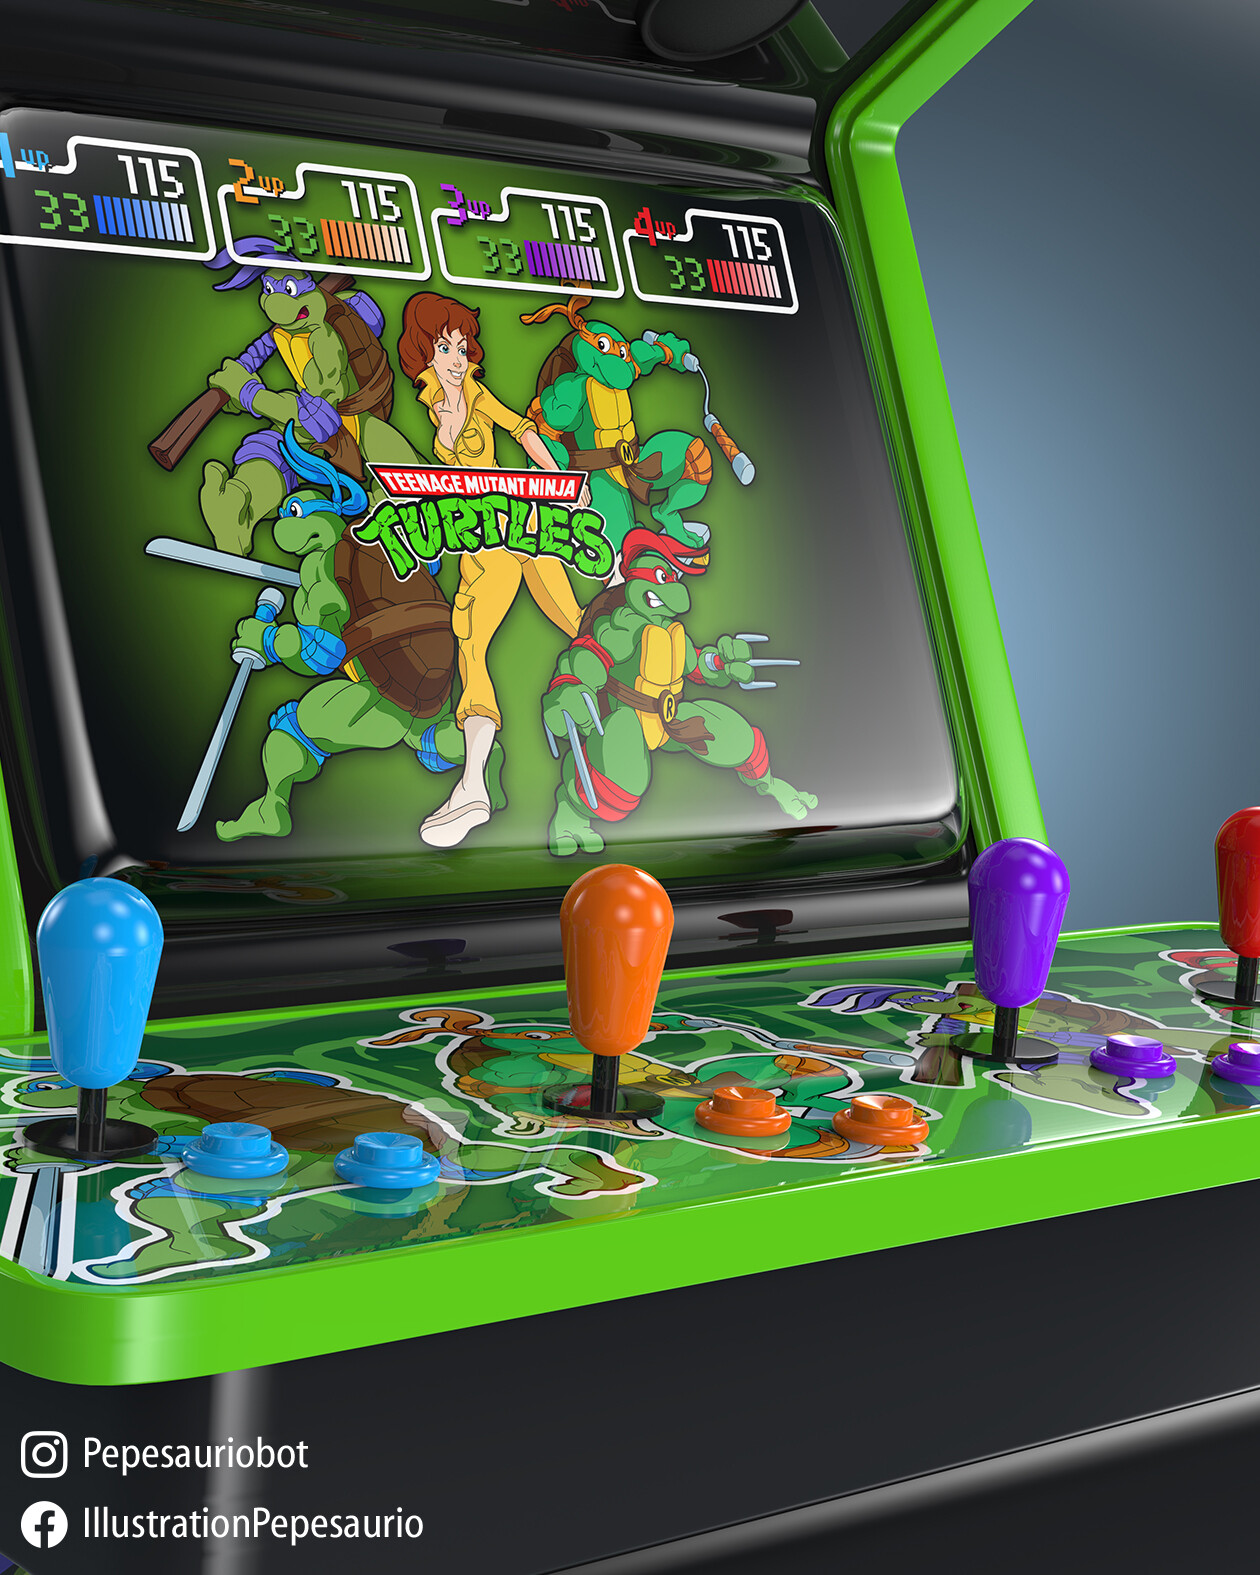 EA is officially dead! #arcade #arcadebar #comics #cosplay #esports # fortnite #gamer #gamerguy #gamergirl #gaming #geek #indiegame…